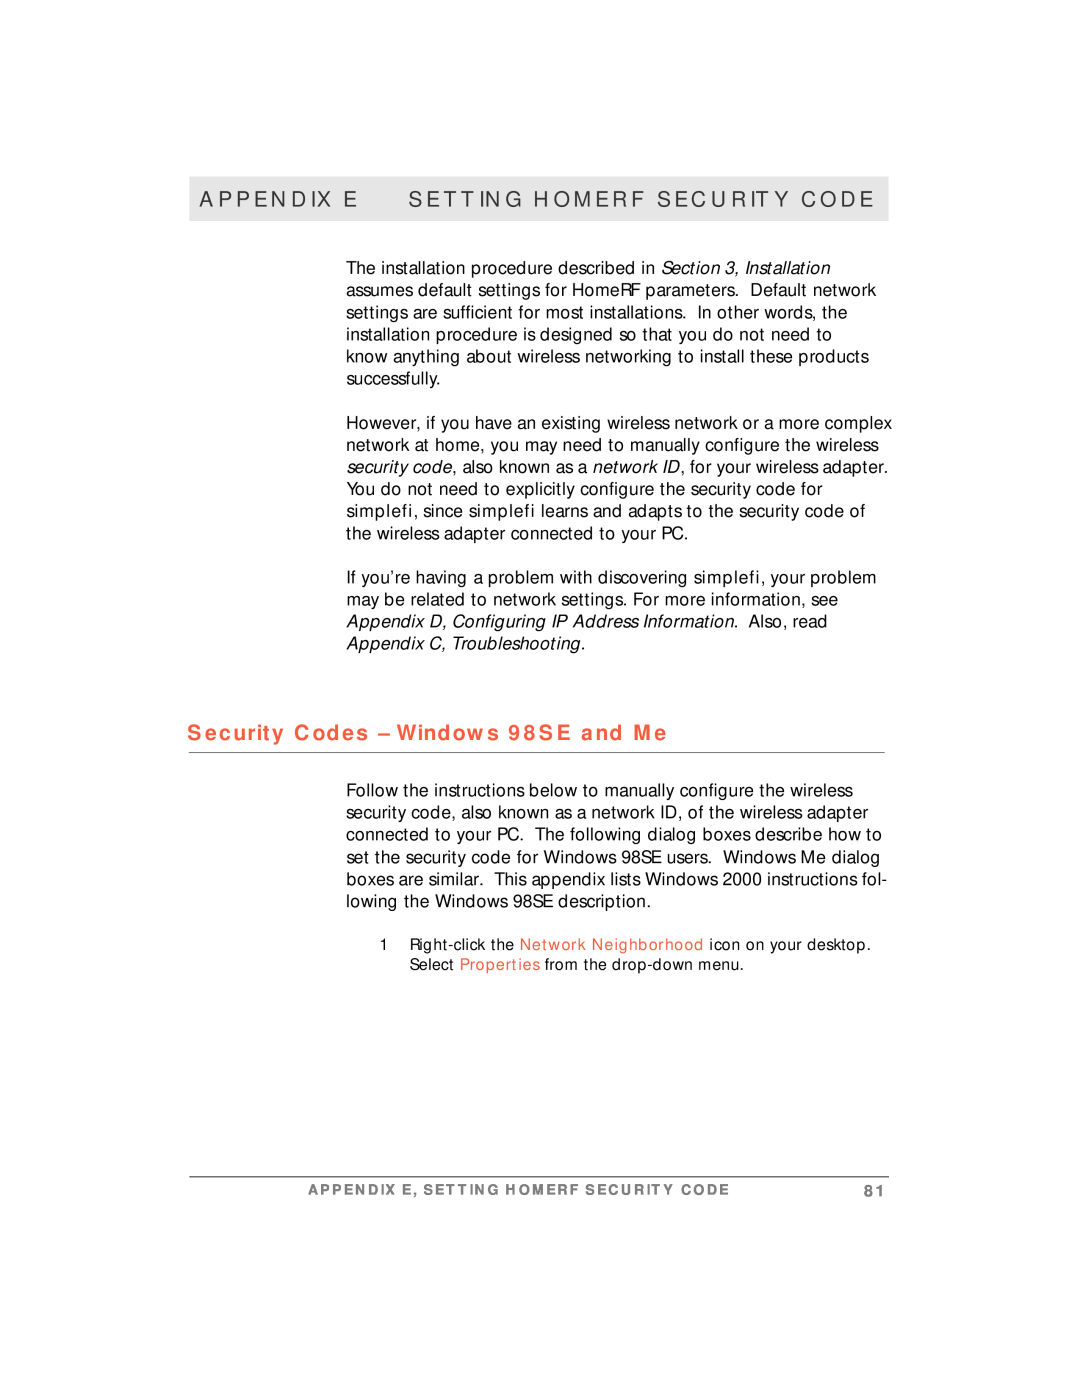 Motorola simplefi manual Appendix E Setting Homerf Security Code, Security Codes - Windows 98SE and Me 